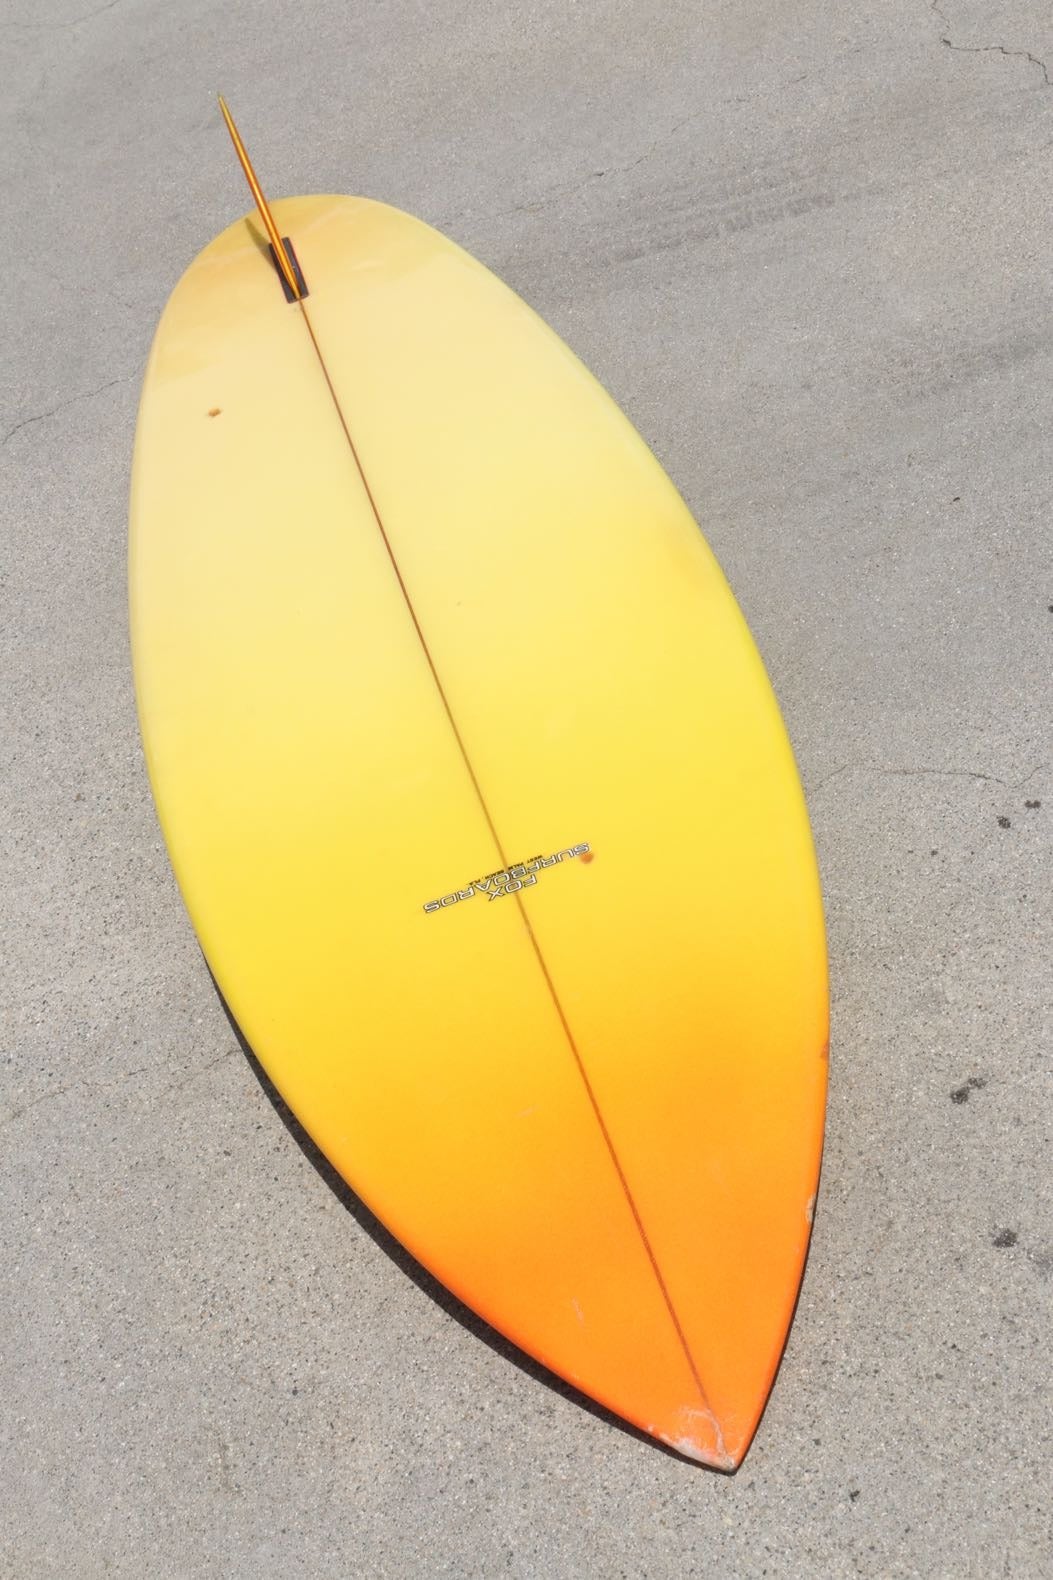 Foam Original Vintage Orange Yellow Airbrushed Fox Surfboard by John Parton 1970s For Sale